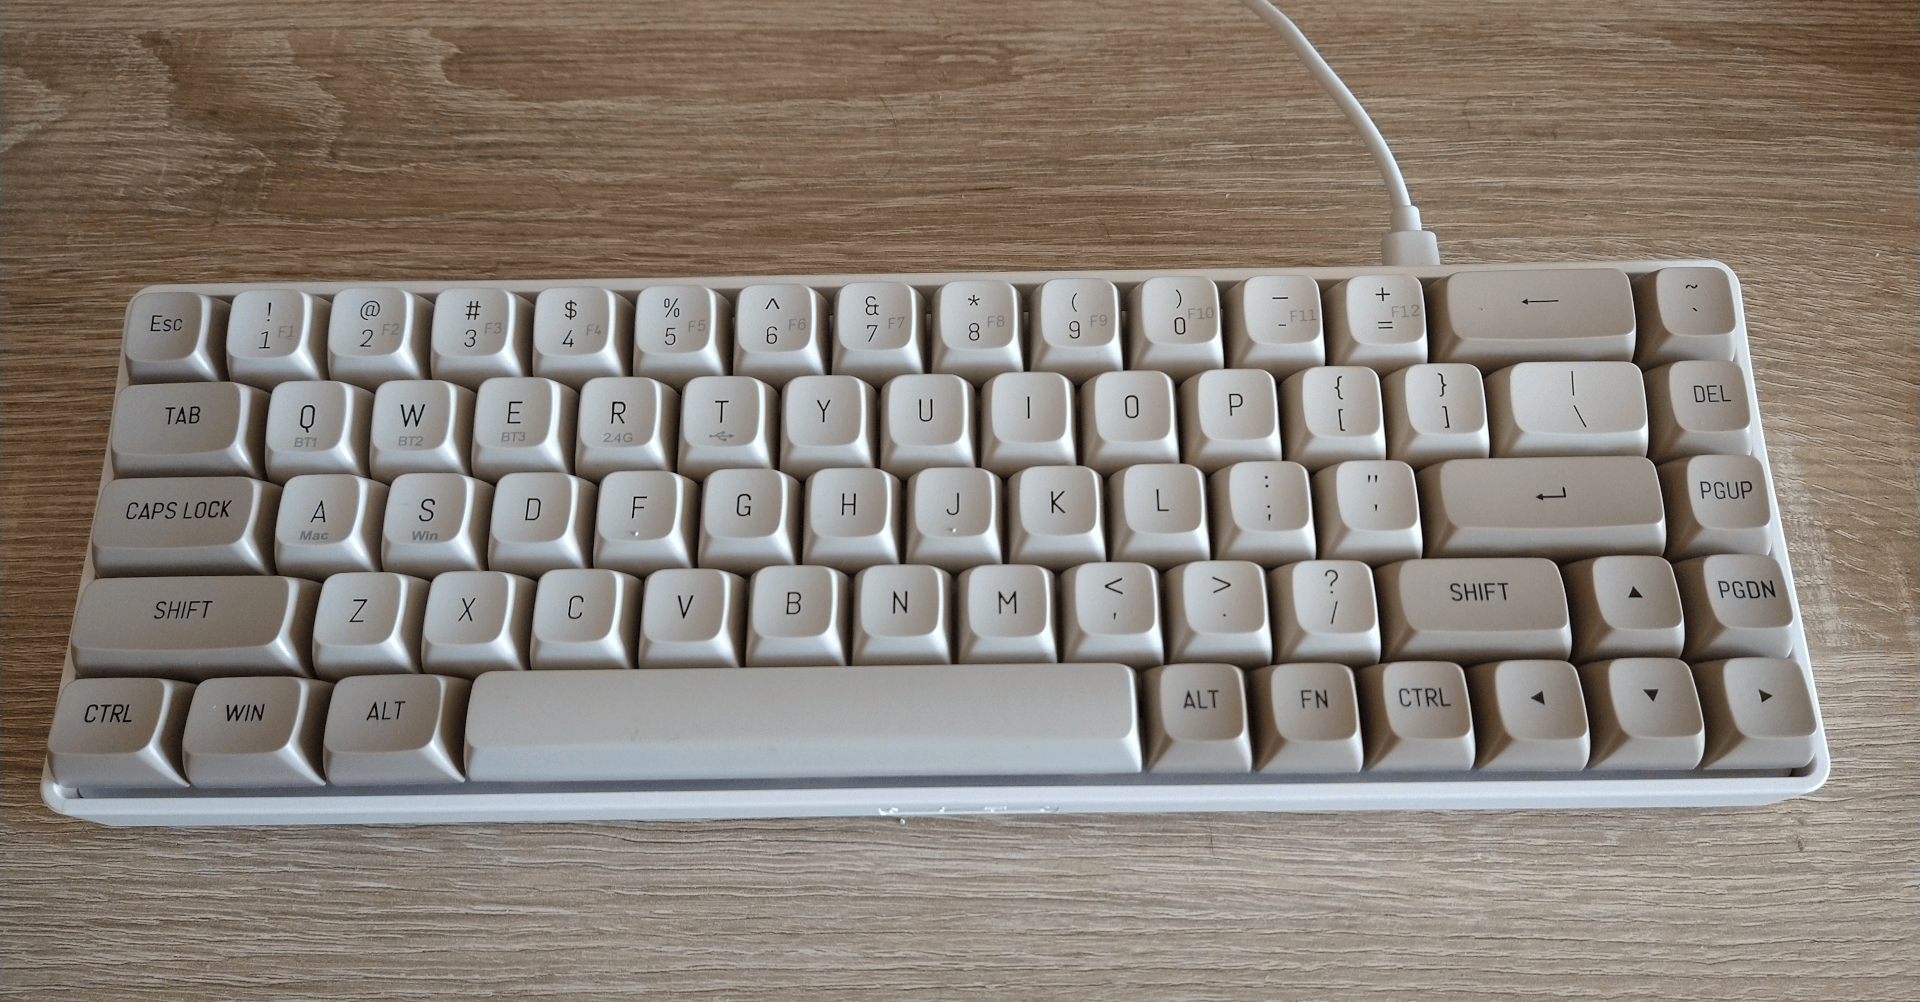 Image of the Aigo A68 keyboard